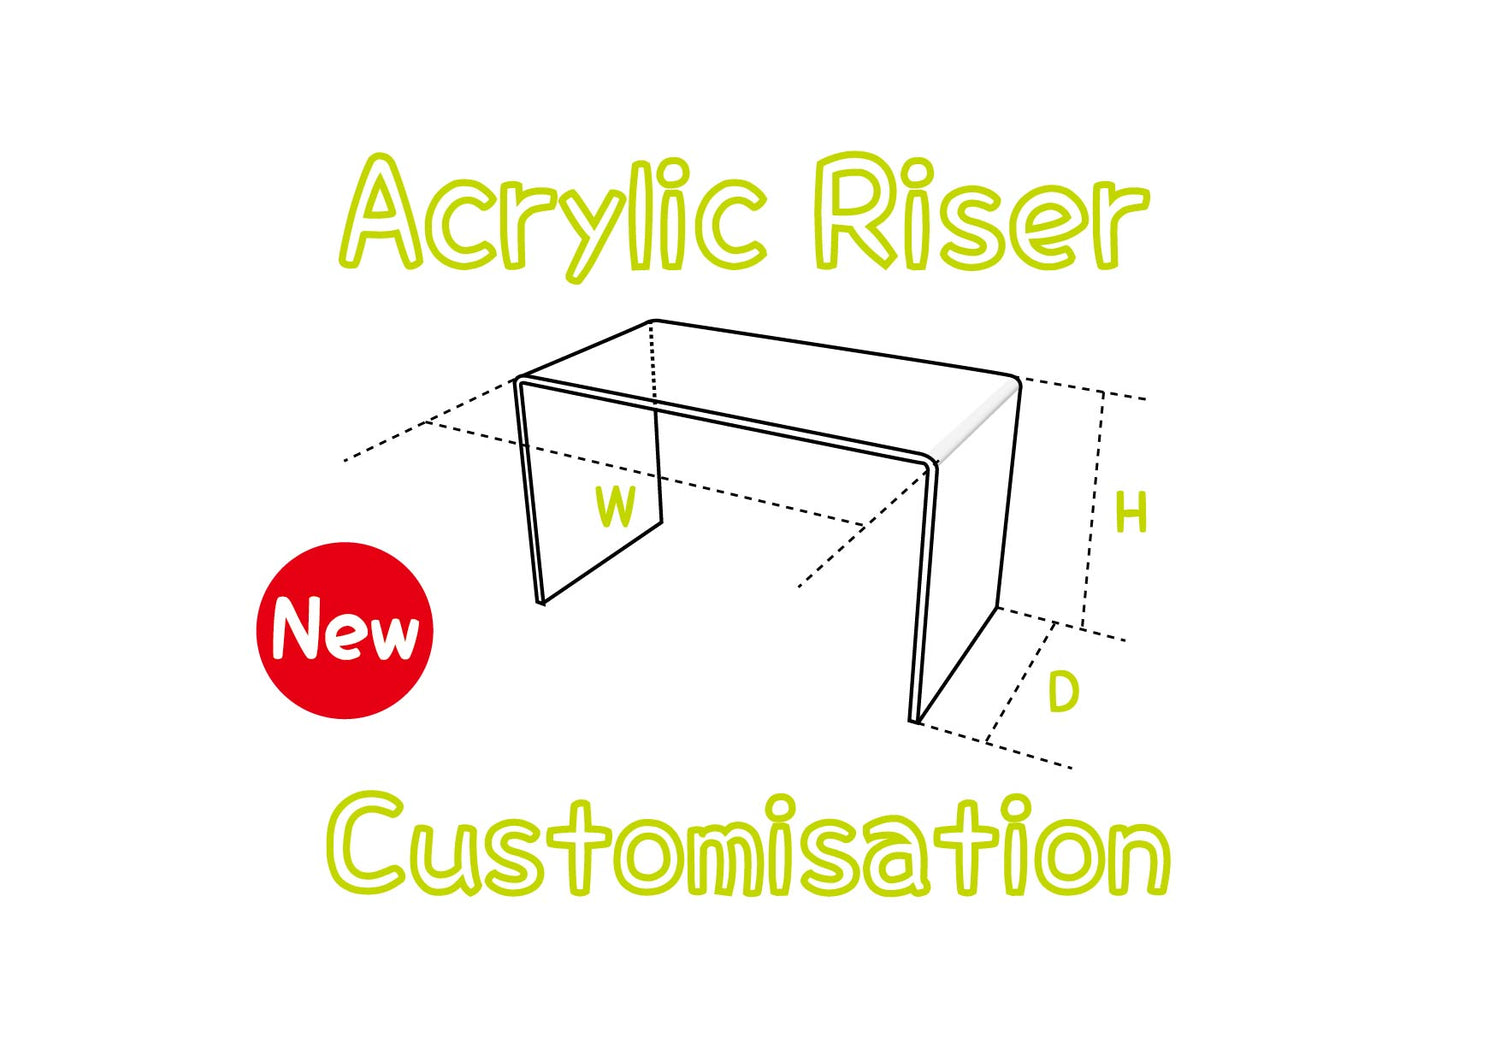 Acrylic Riser Customisation